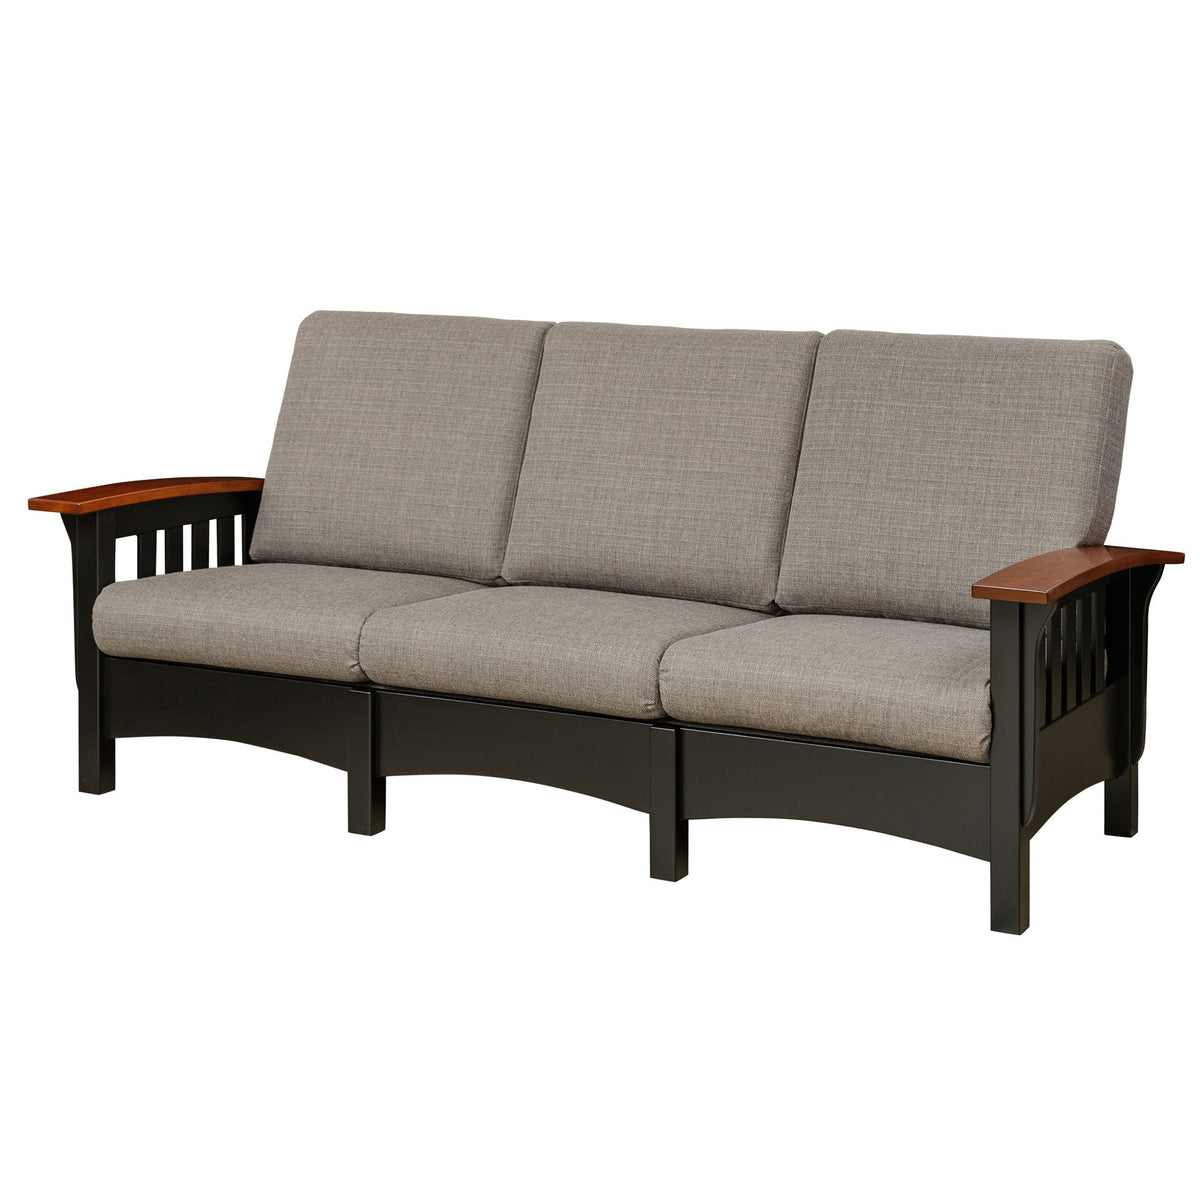 Classic Mission Morris Sofa - snyders.furniture